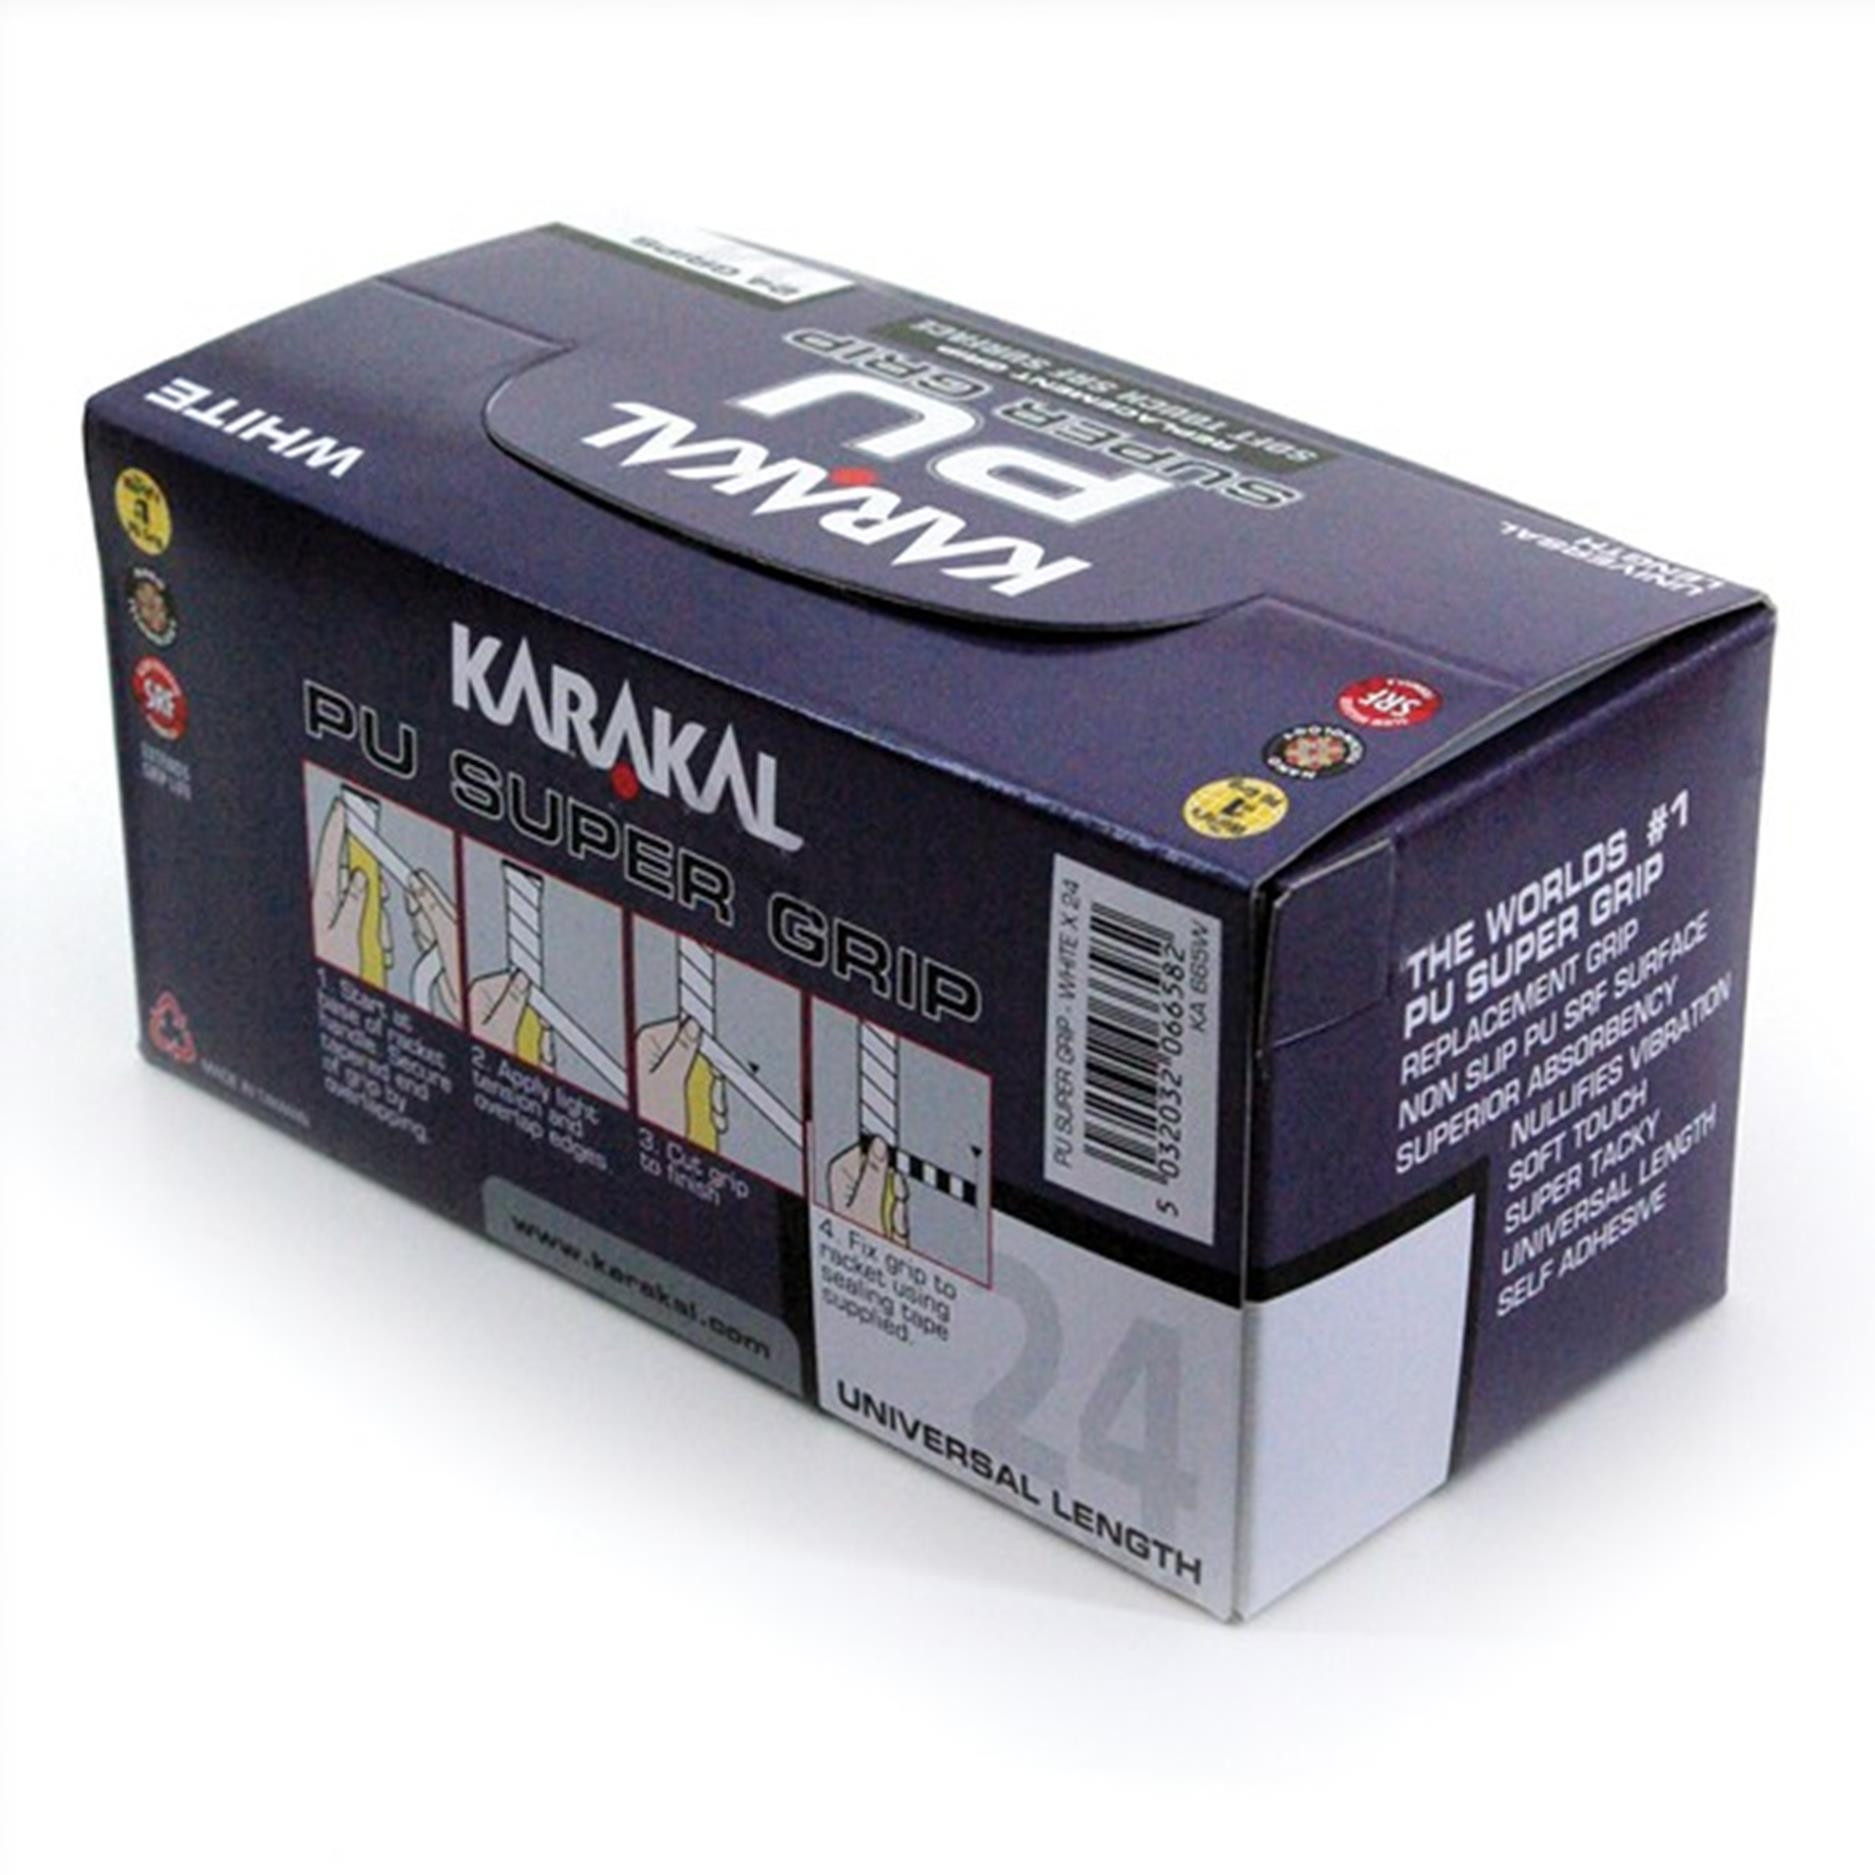 Karakal Racket PU Super Grip Box 24 D Unisex Adulto